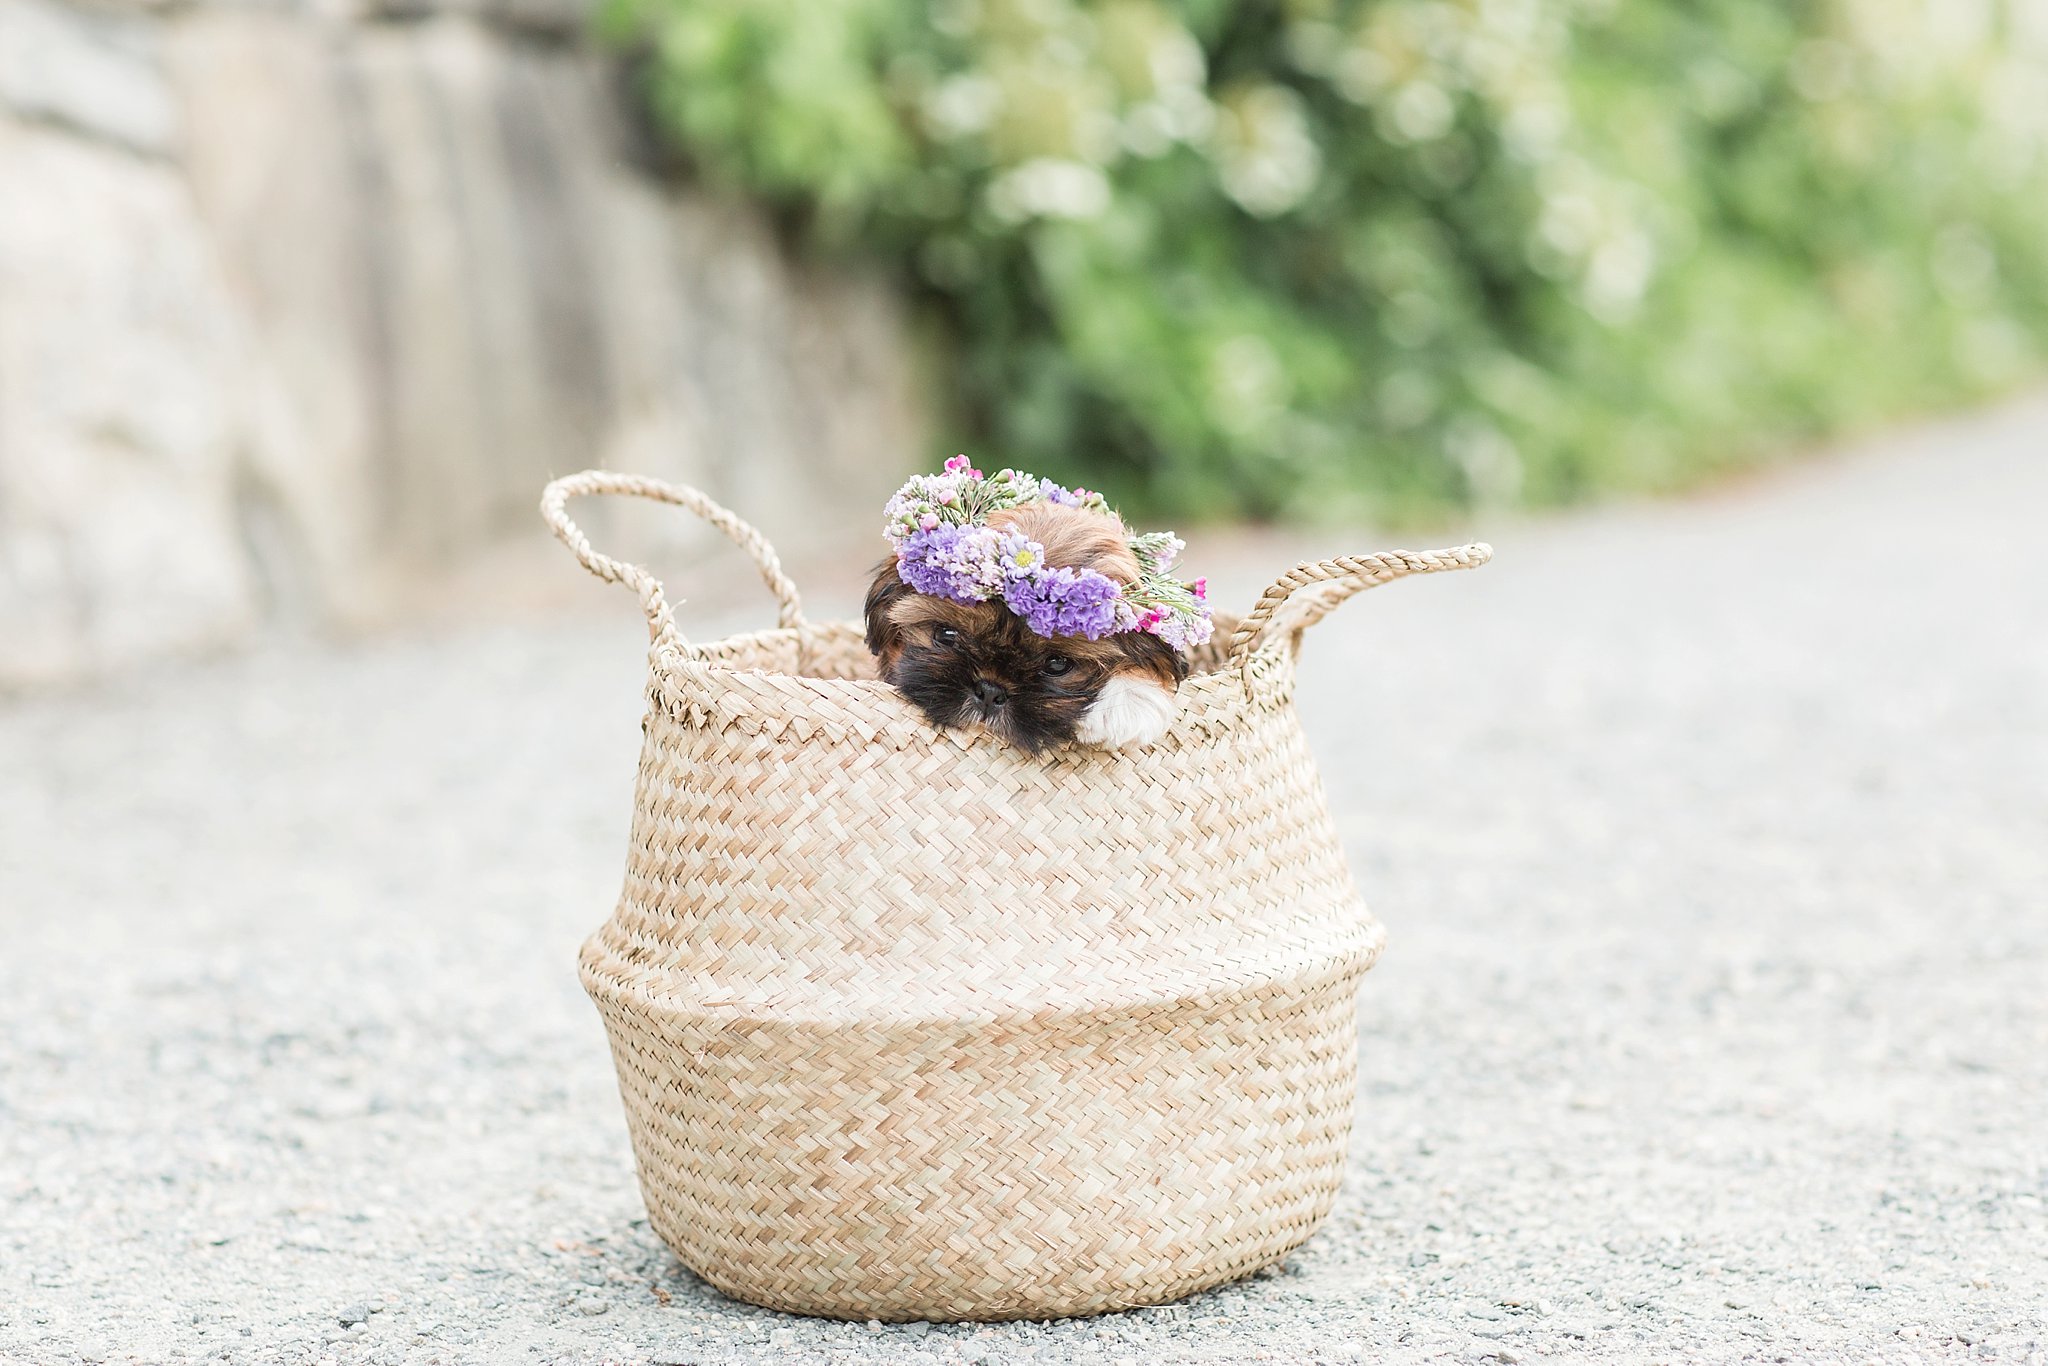 shitzu puppy wearing a flower crown chewing on a basket